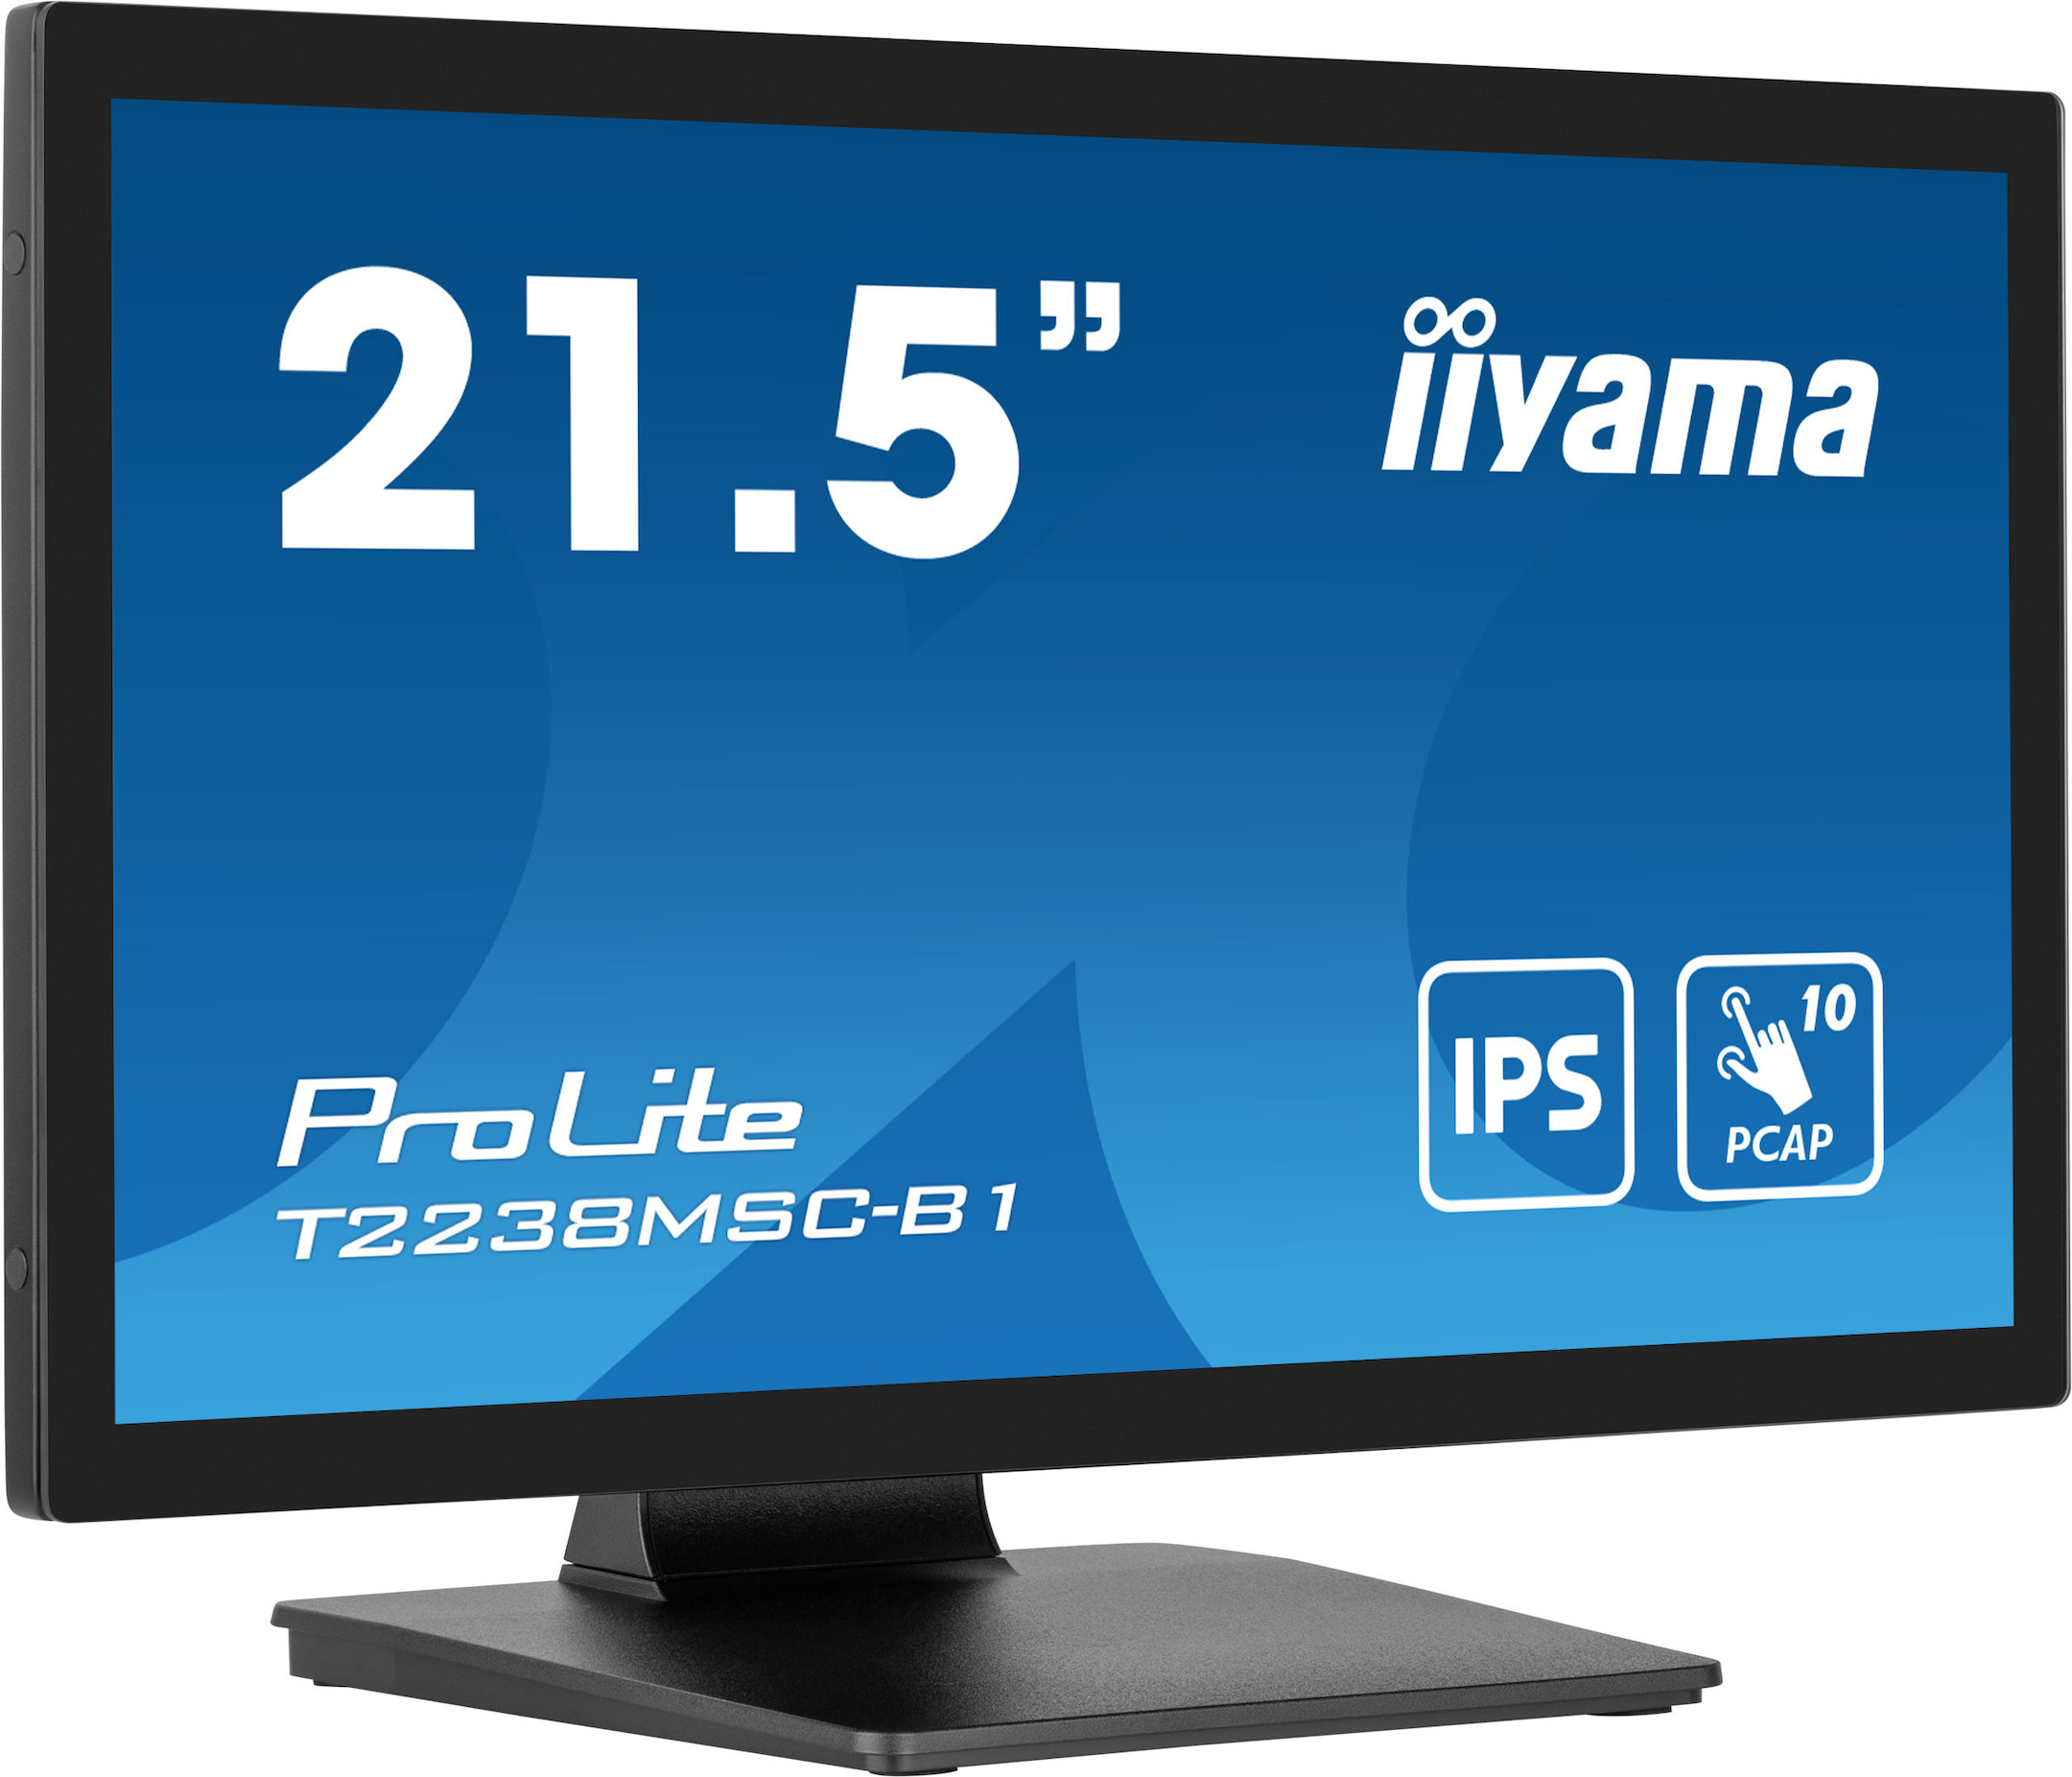 iiyama-PROLITE-T2238MSC-B1